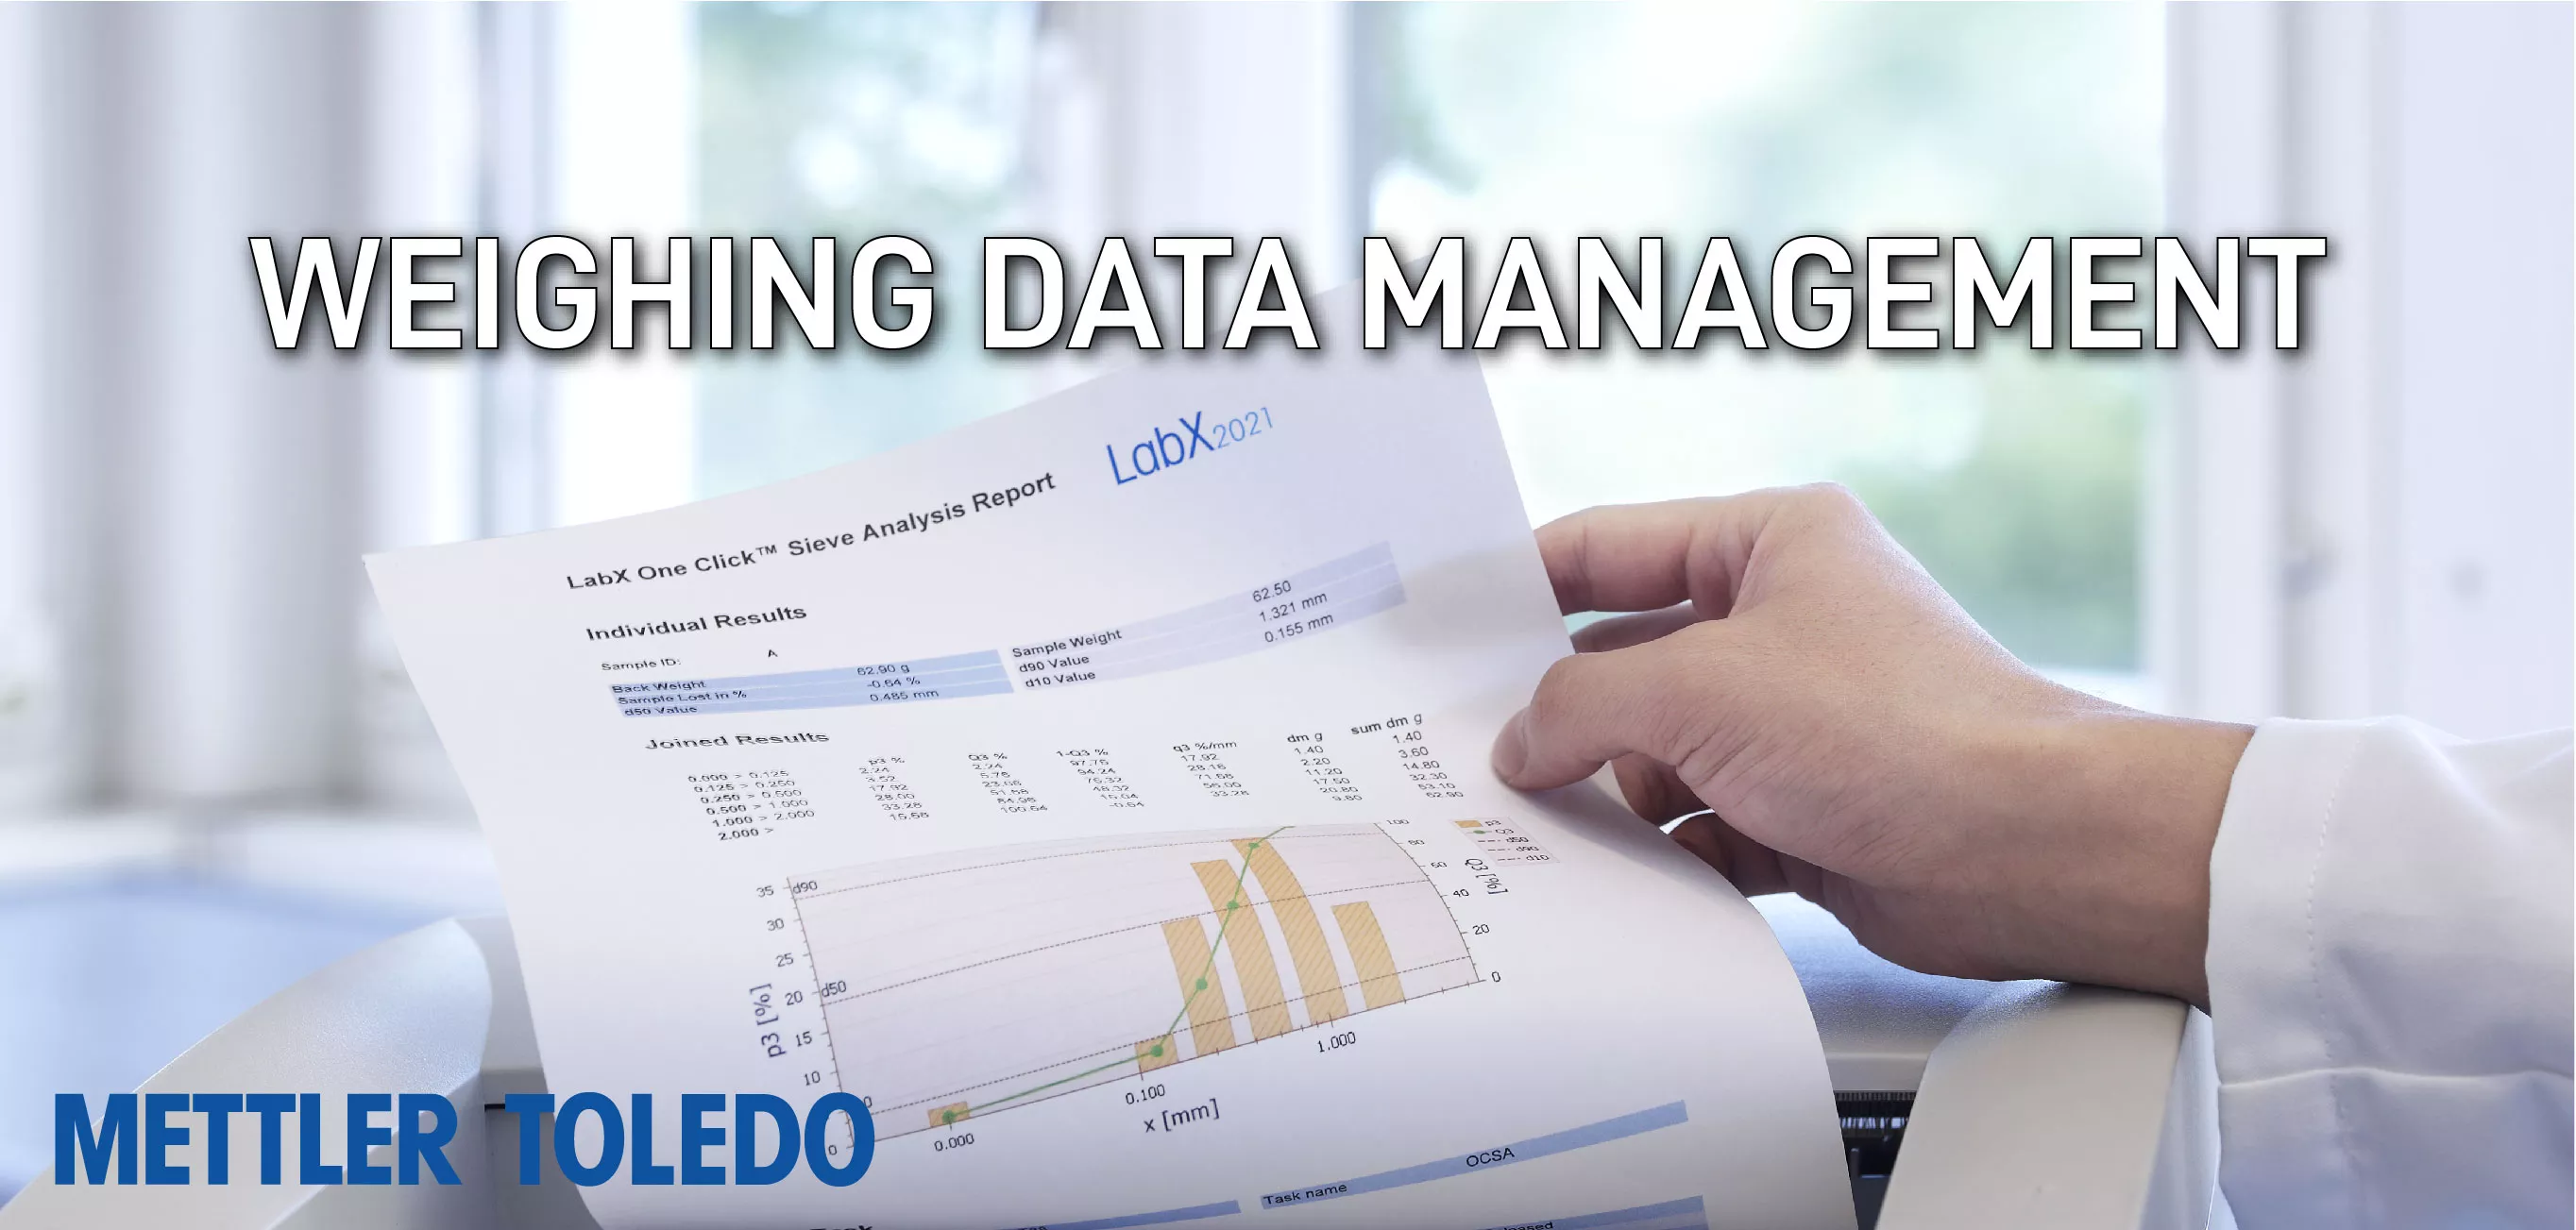 Weighing Data Management webinar by METTLER TOLEDO